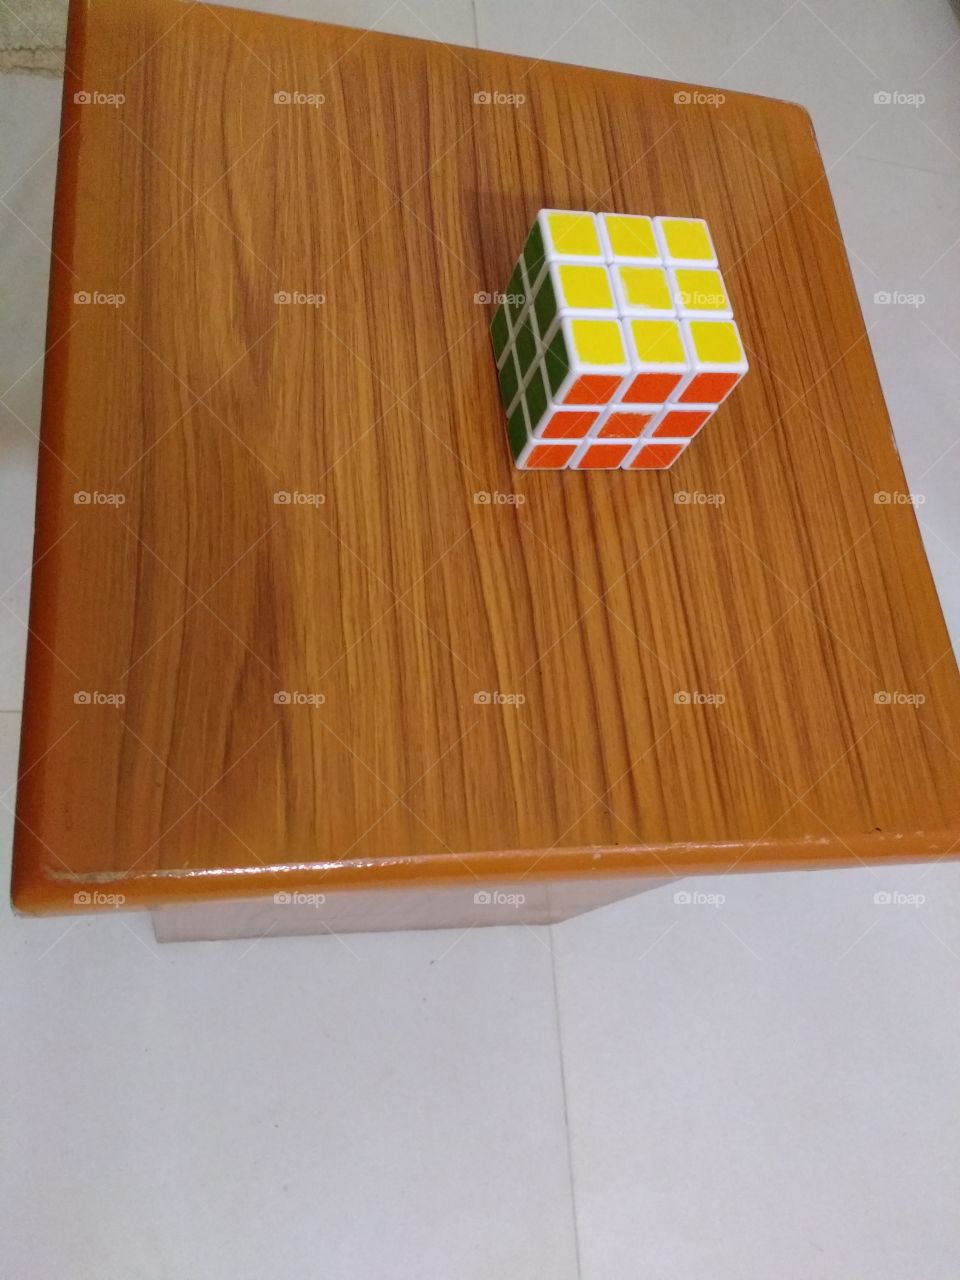 Rubik's cube.